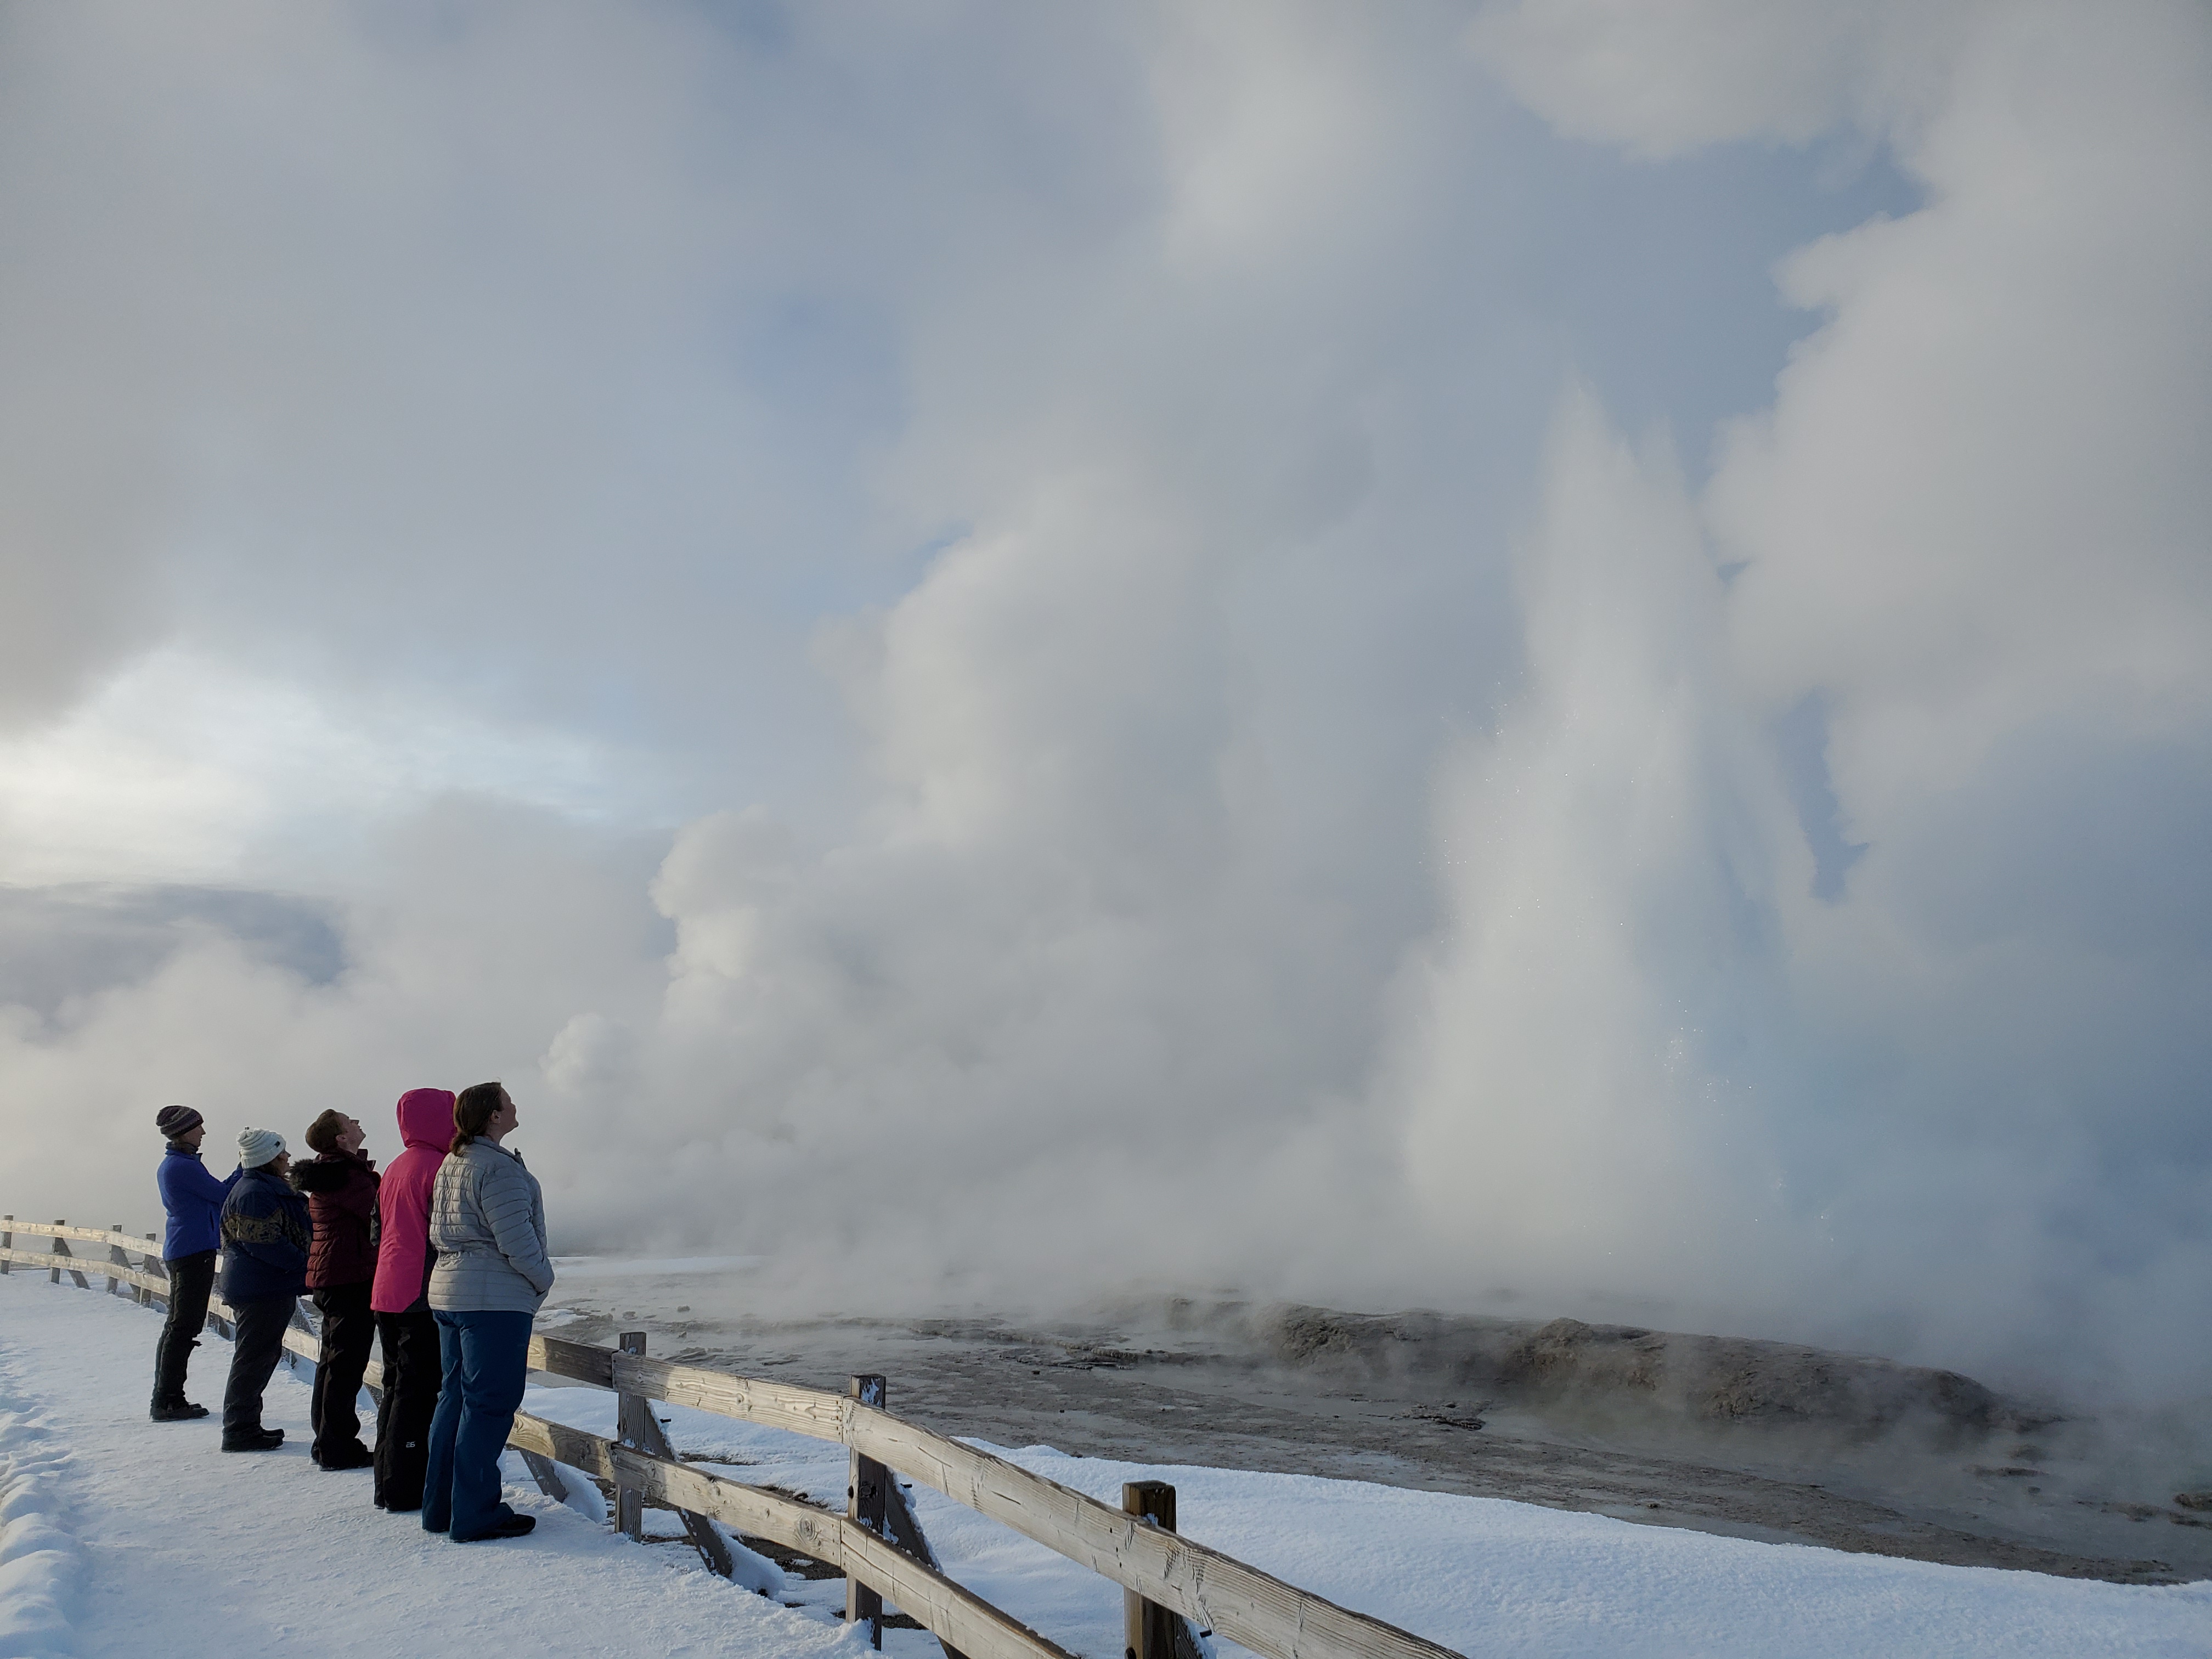 The group watches Fountain geyser erupt.